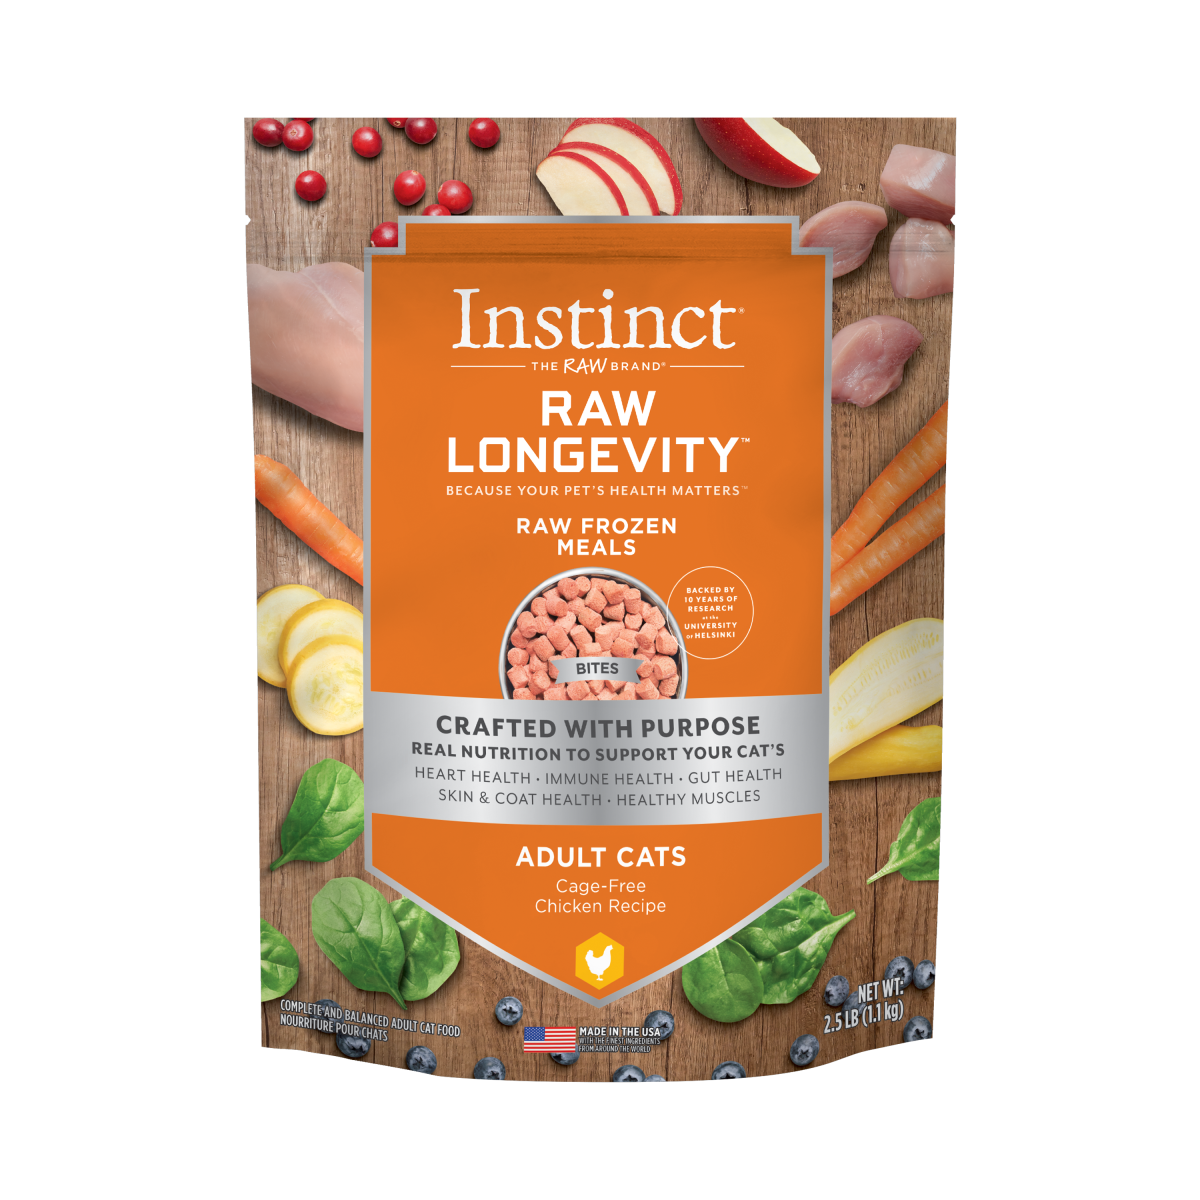 Instinct - Raw Longevity Frozen Bites Cage-Free Chicken Recipe